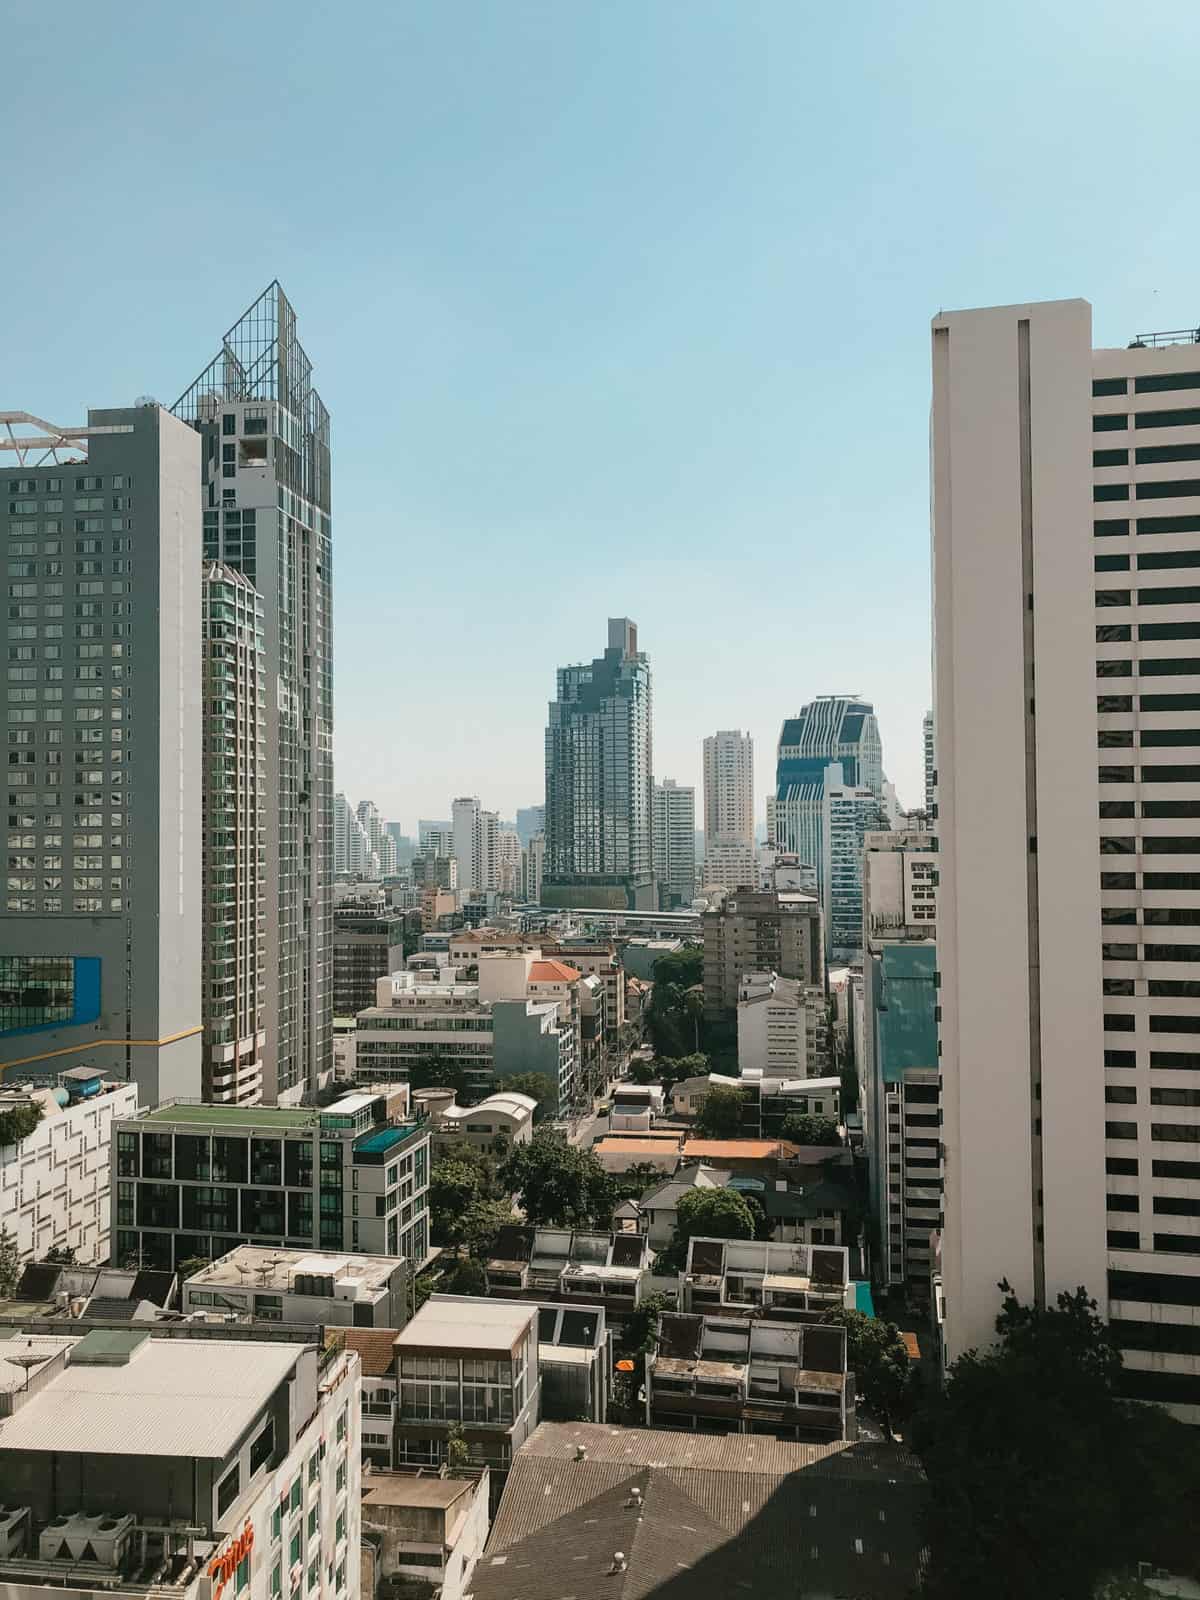 The Bangkok city skyline from above.